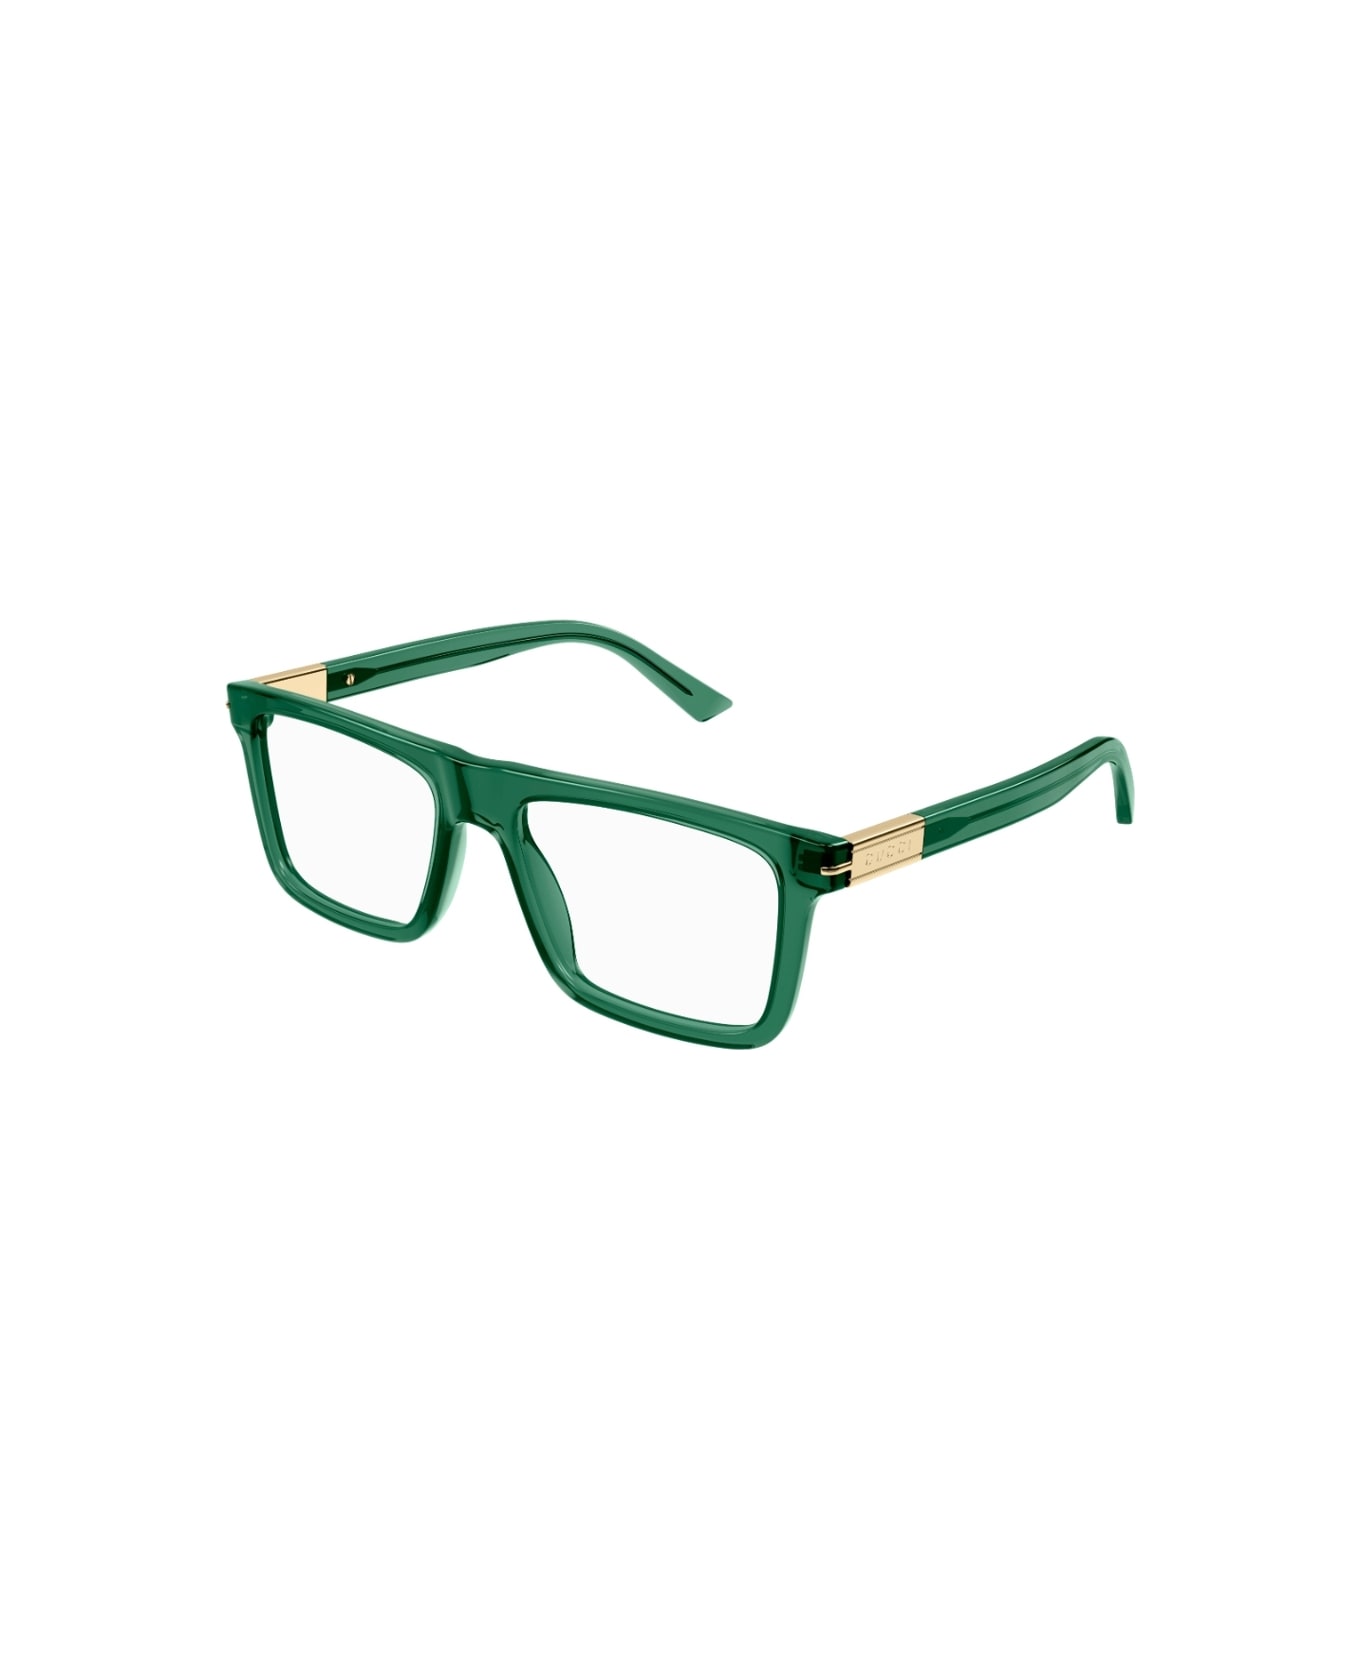 Gucci Eyewear GG1504 003 Glasses - Verde